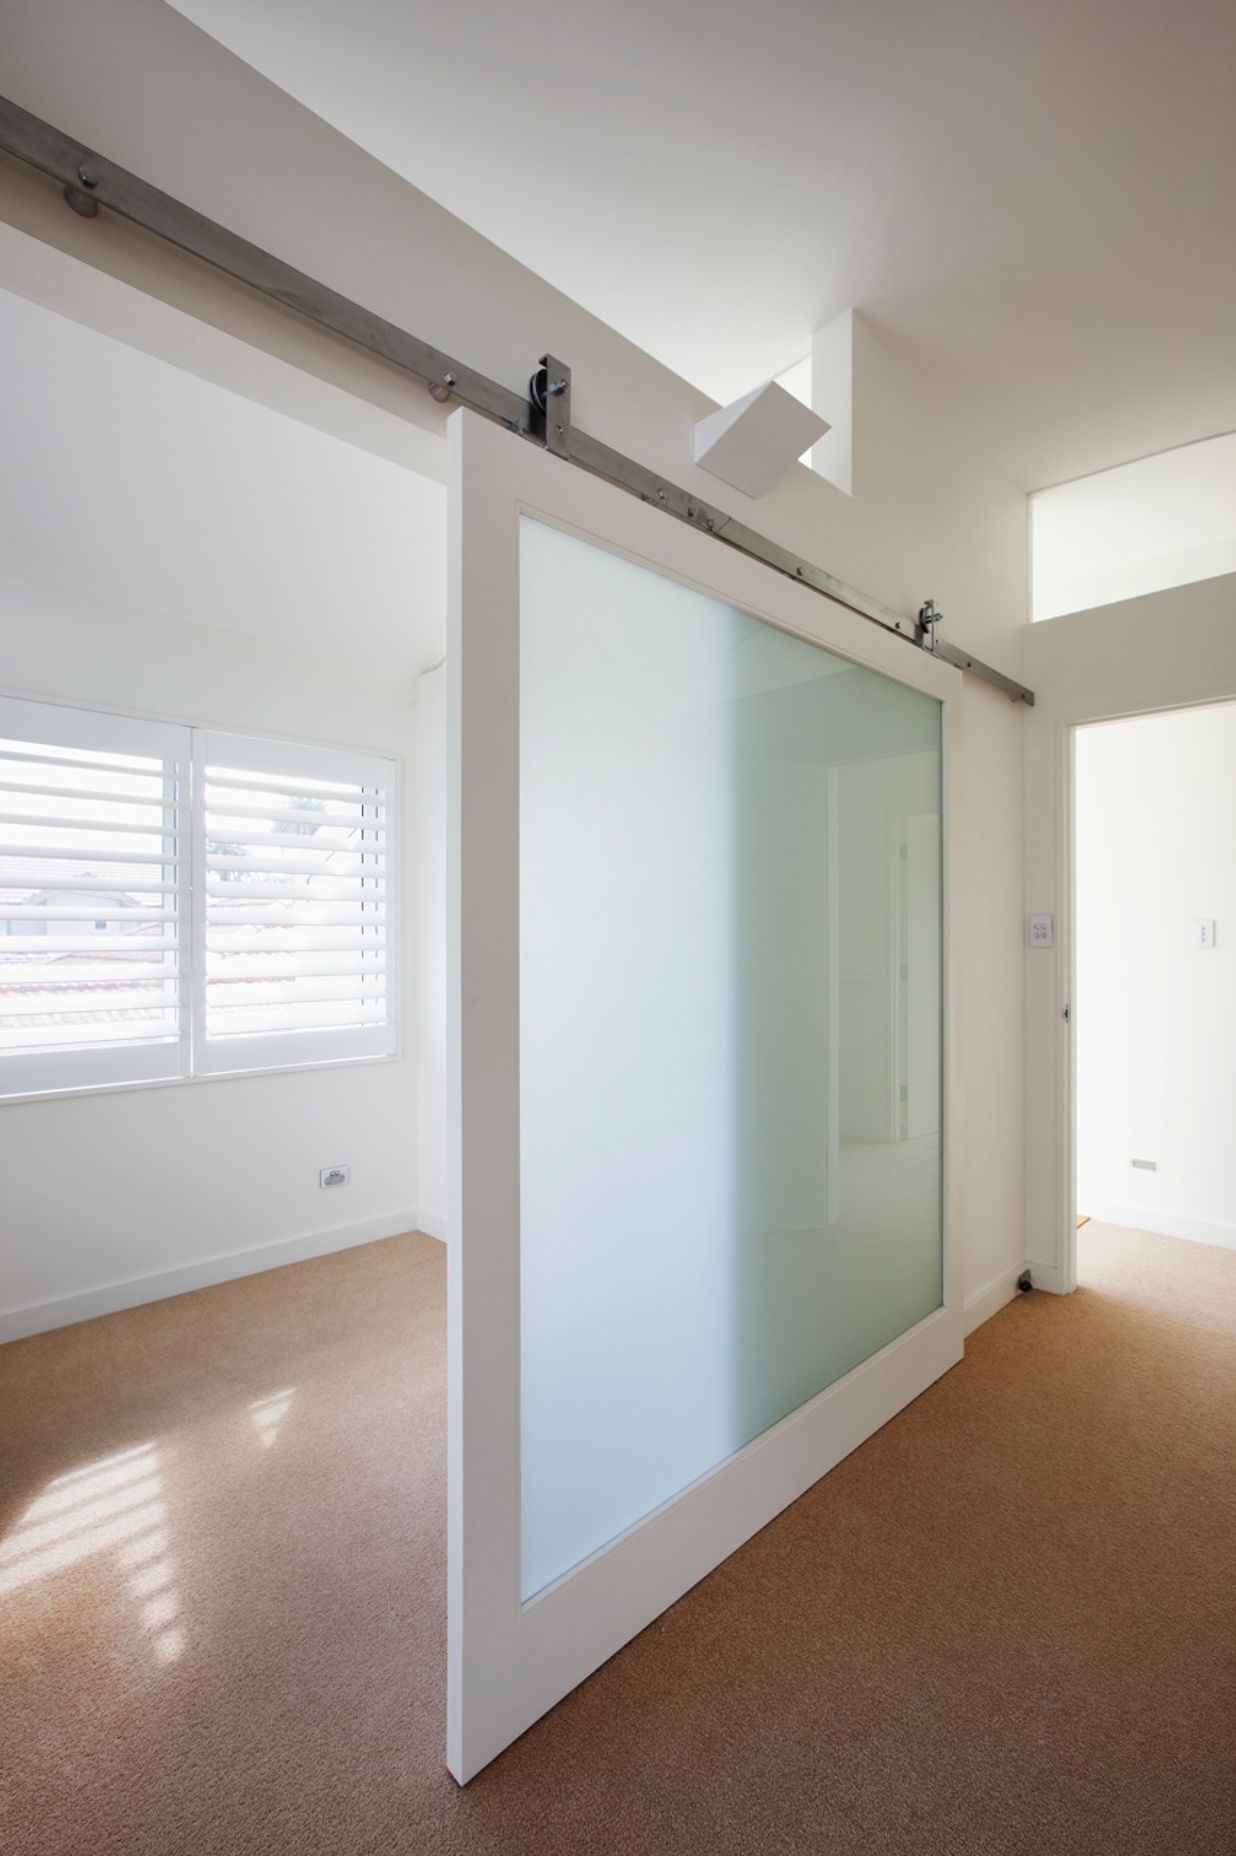 Large glazed sliding door to main bedroom study